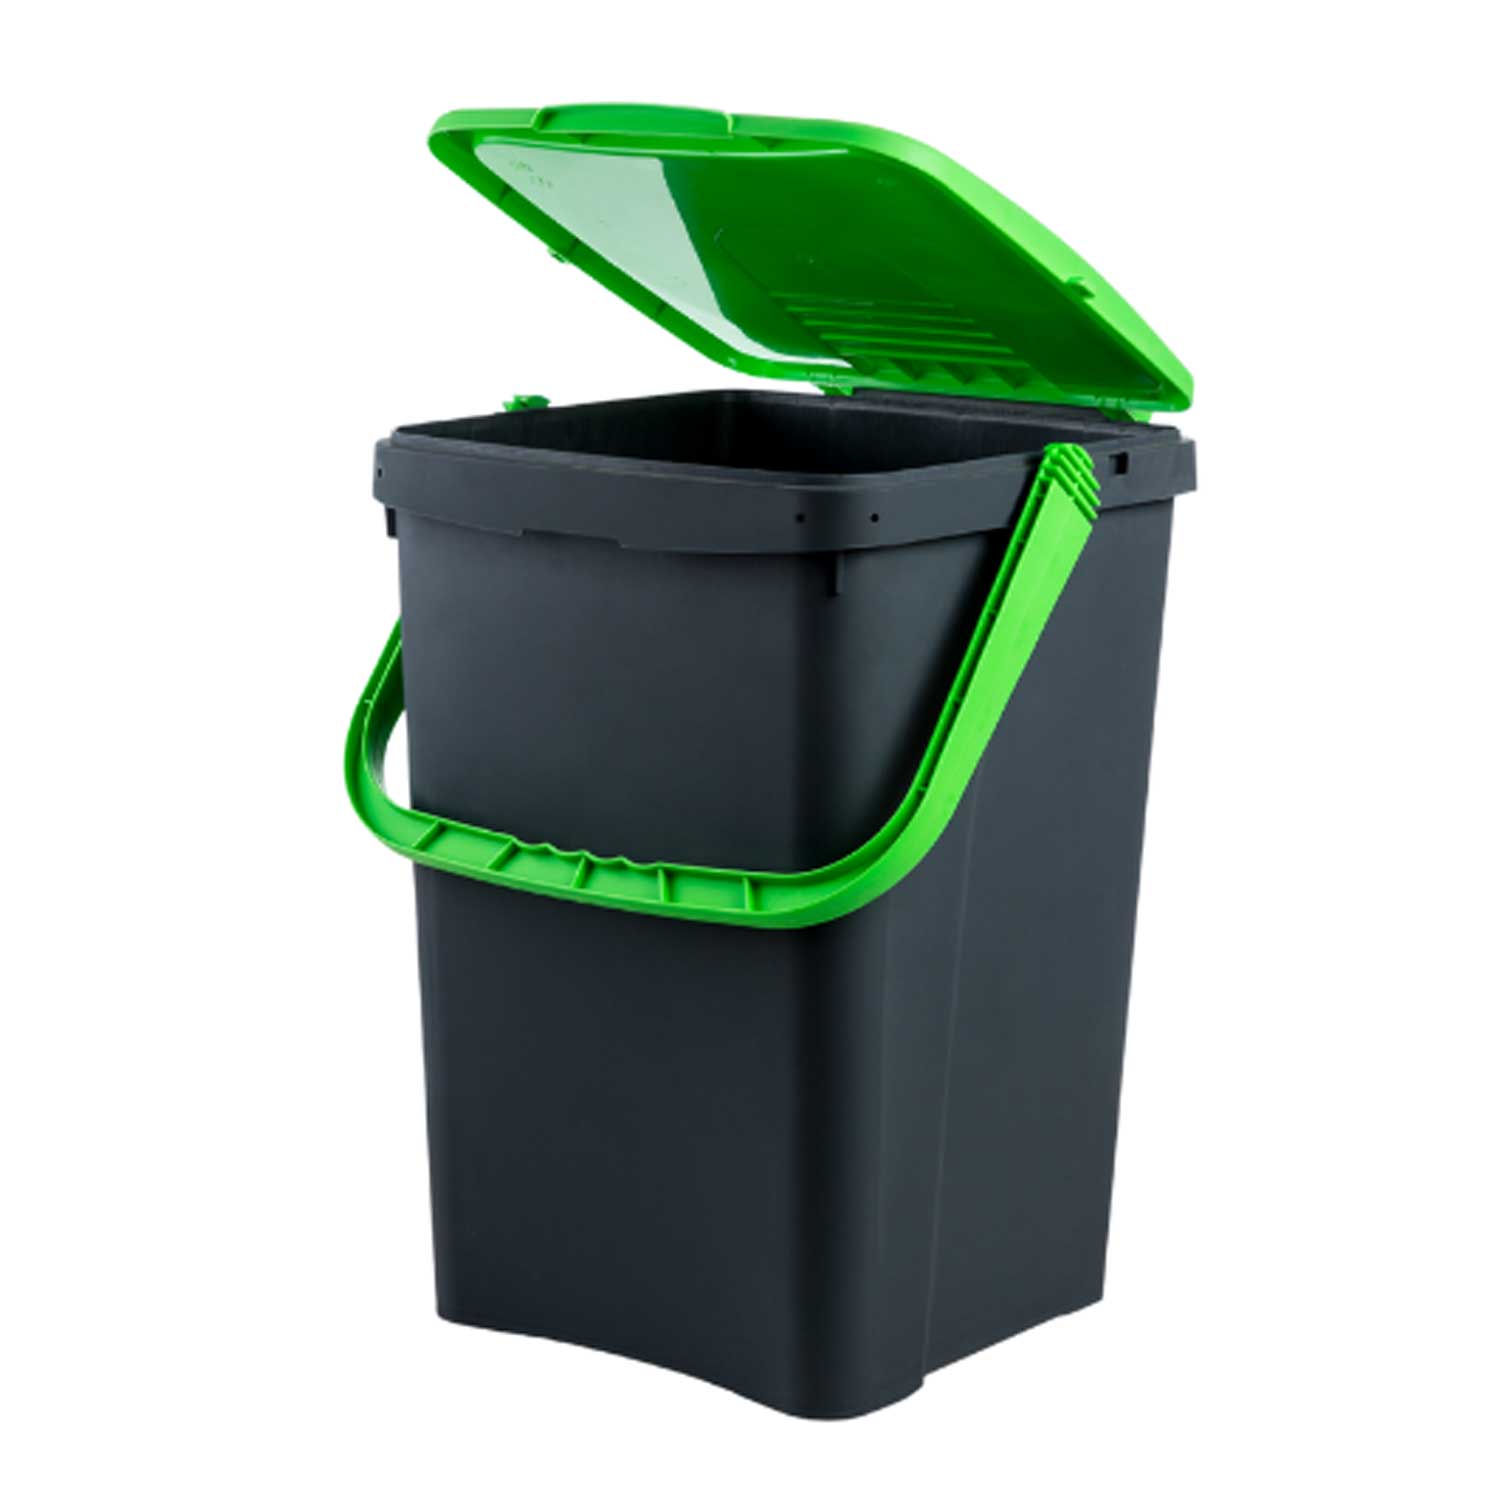 Ecoplast pattumiera per raccolta differenziata 50 lt, bidone spazzatura verde